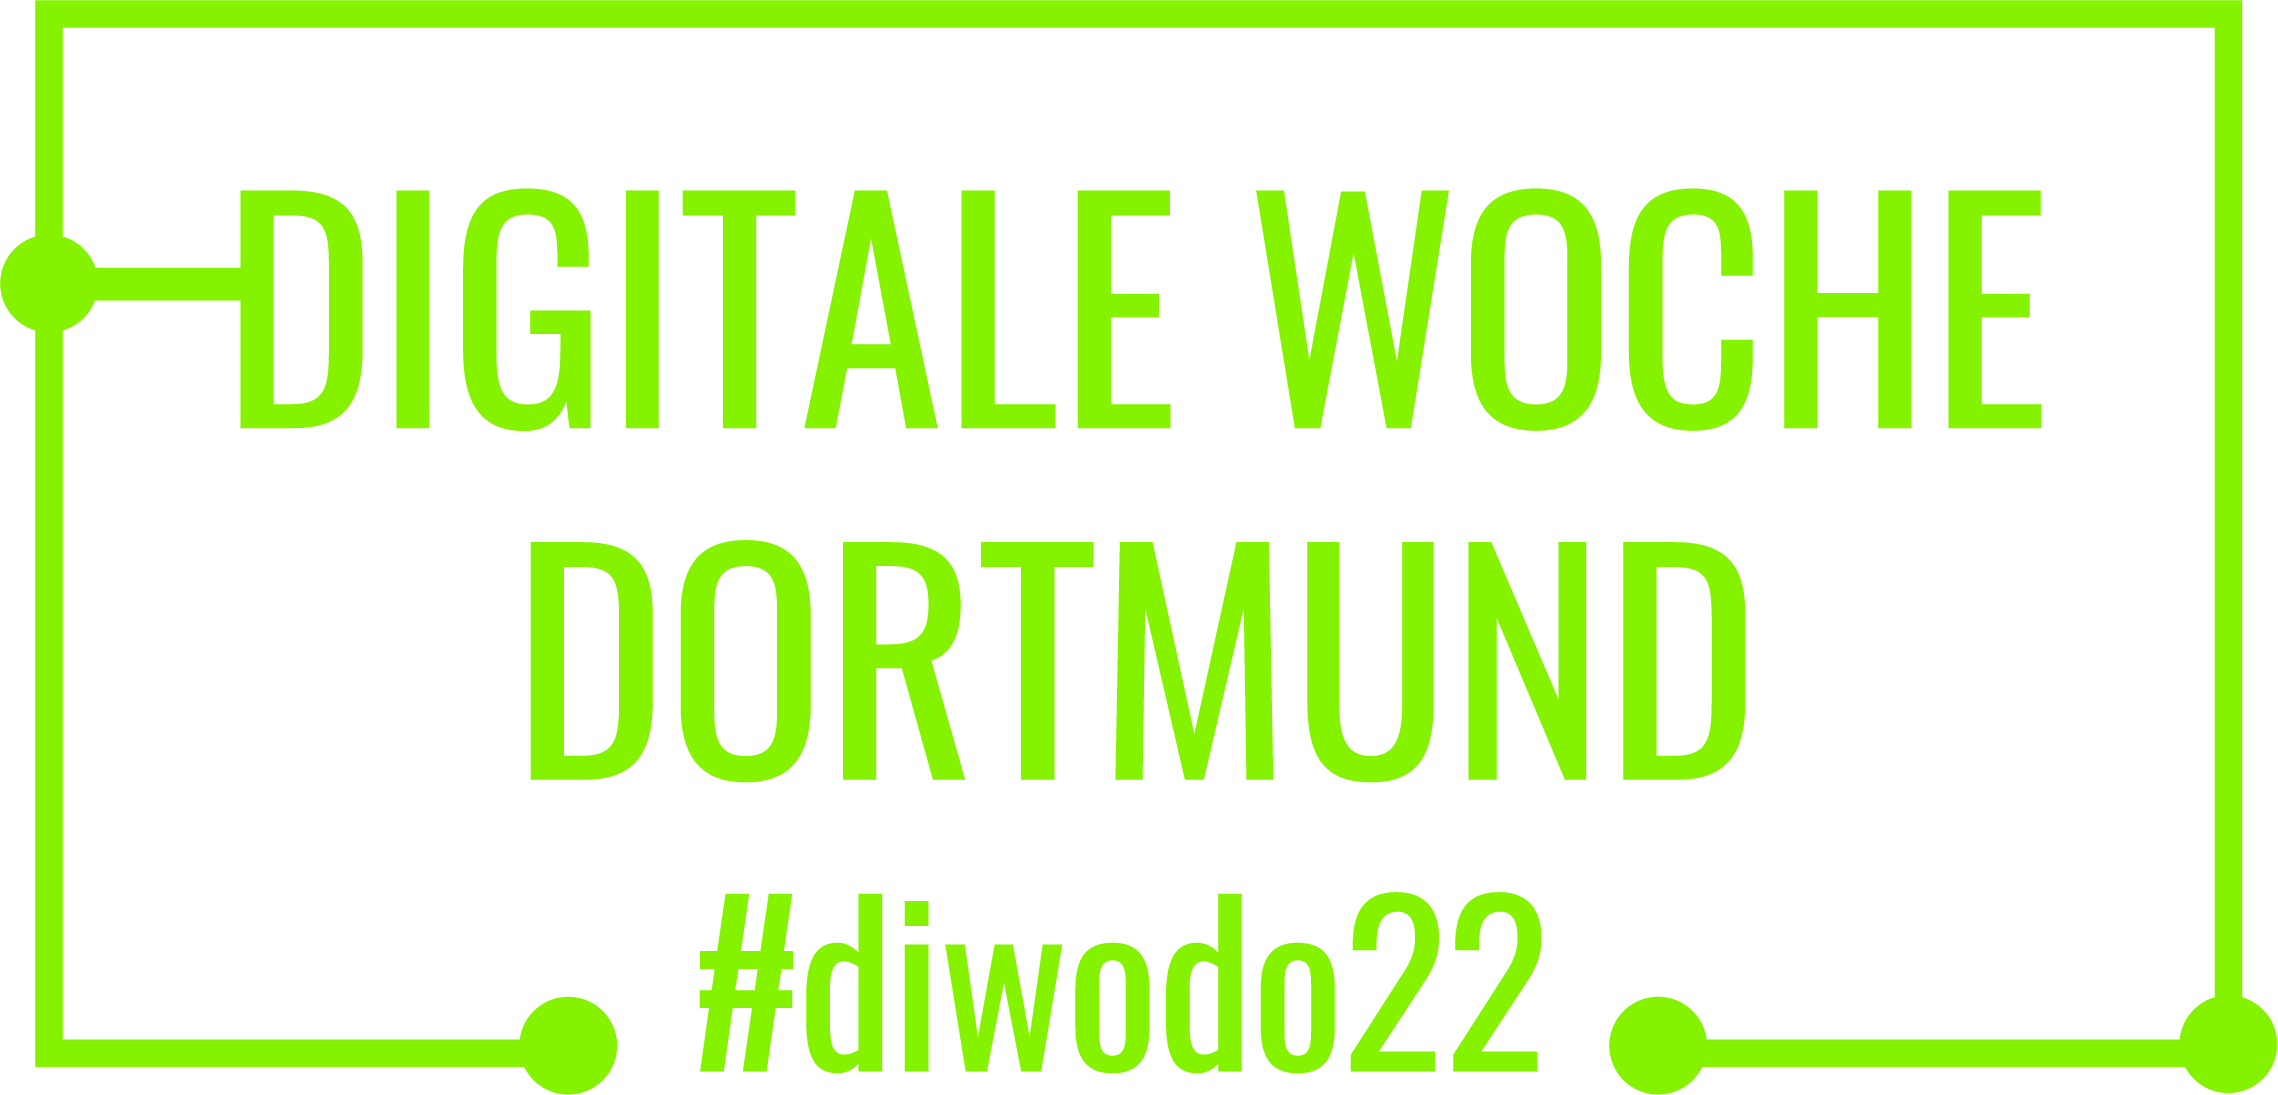 #diwodo22